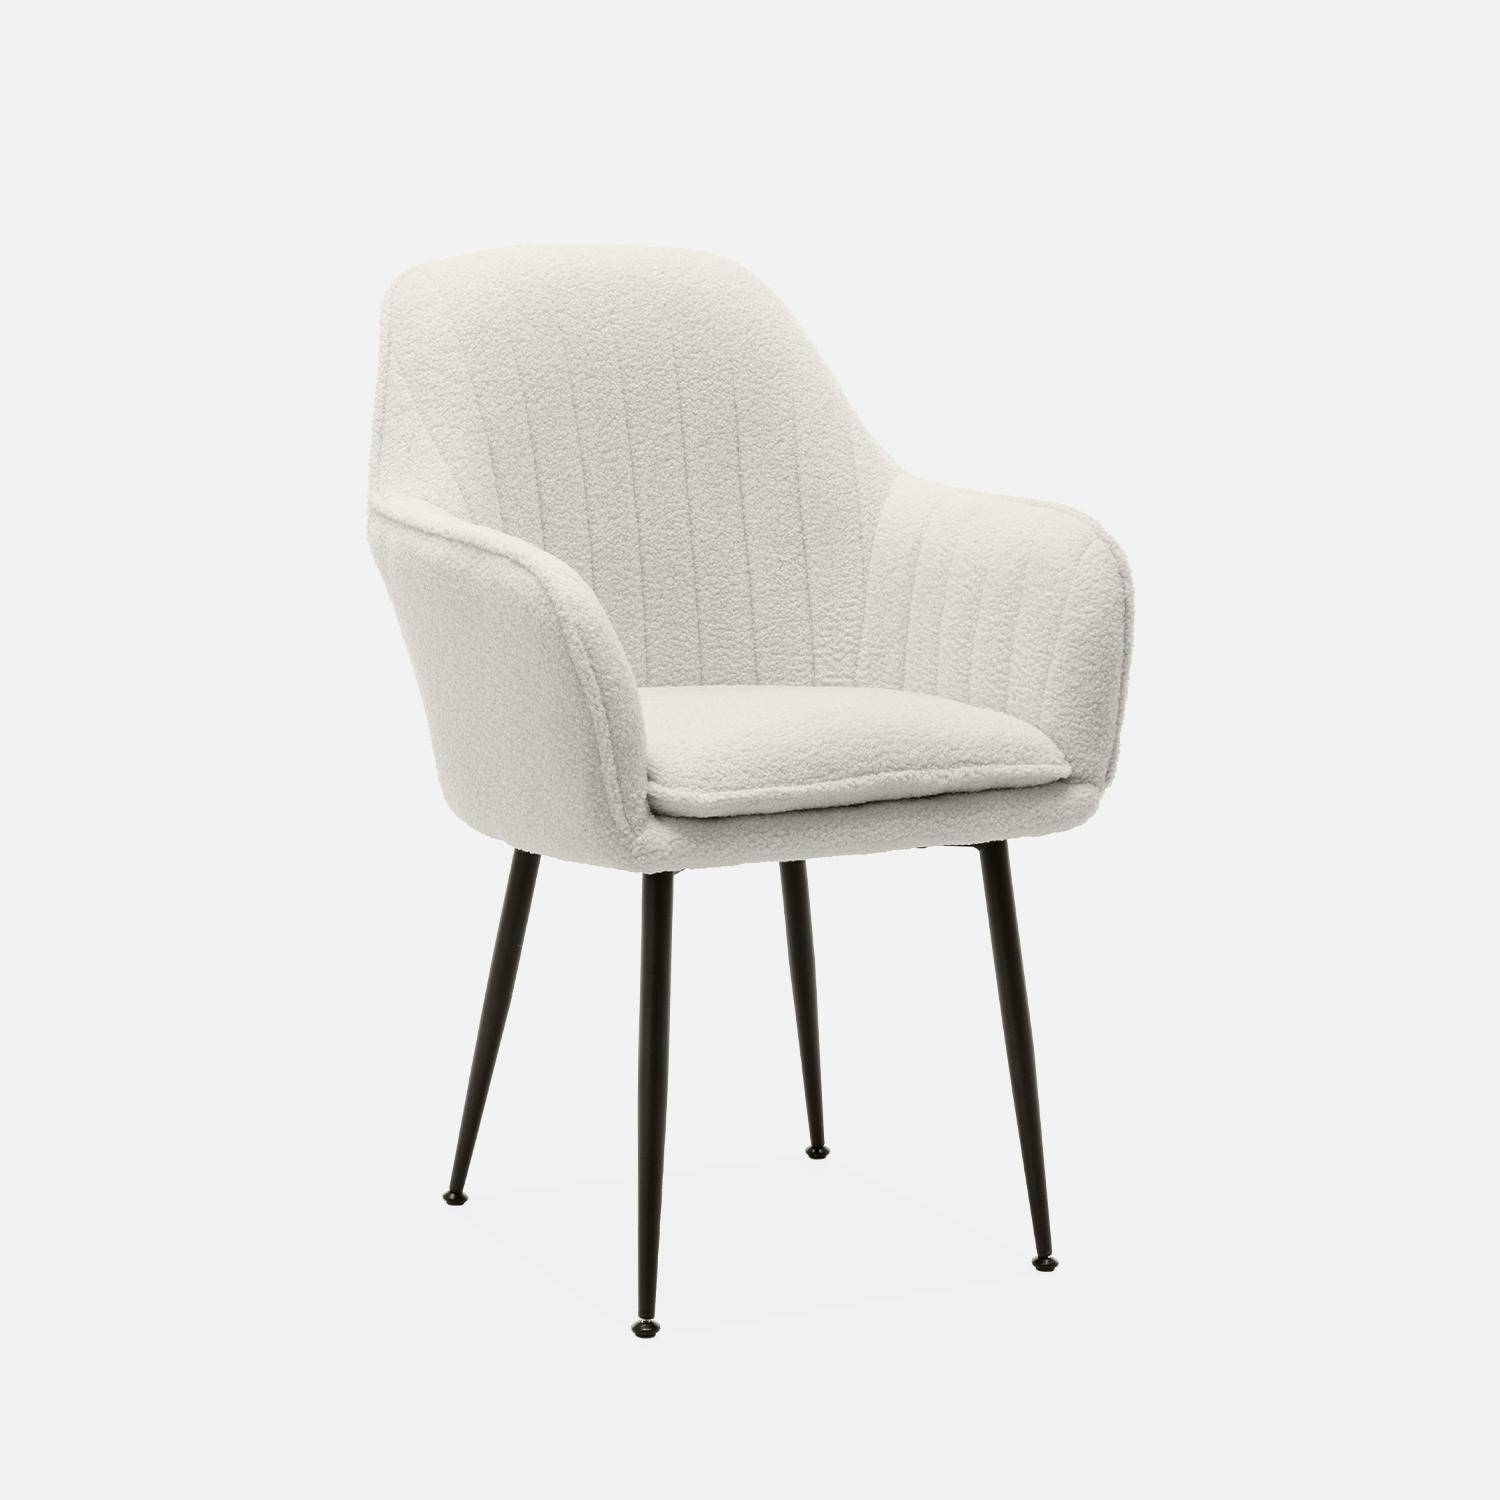 Boucle armchair with metal legs, 58x58x85cm - Shella Boucle - White Photo3